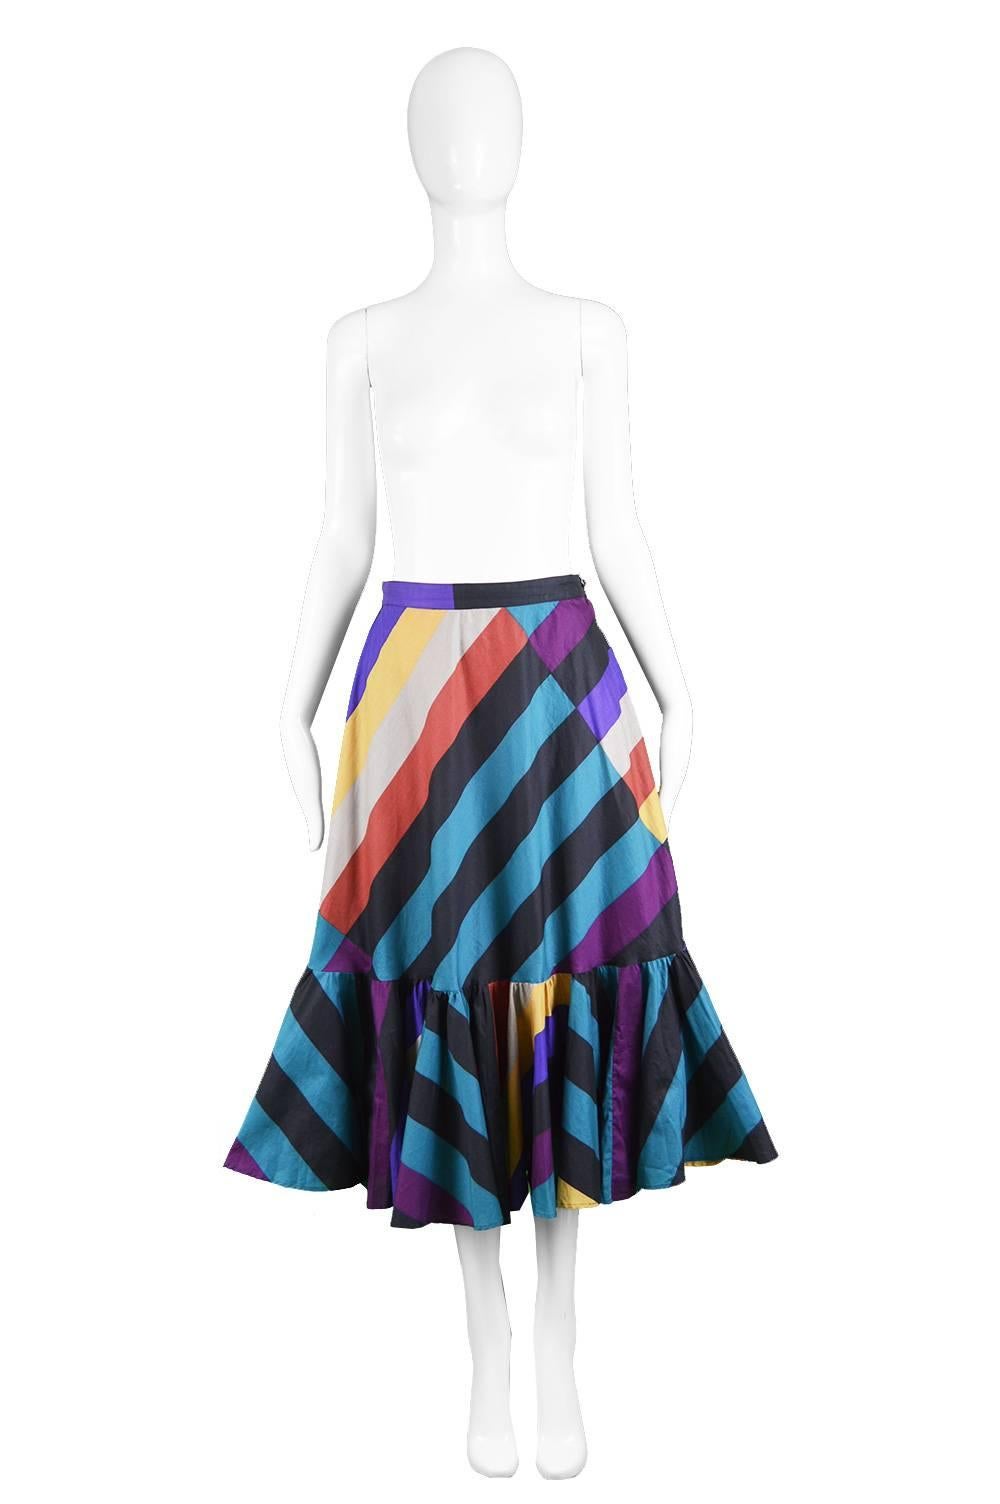 G. Gucci Vintage 1970's Colorful Stripy Cotton Skirt with Full Flounce Hem

Estimated Size: UK 10/ US 6/ EU 38. Please check measurements.
Waist - 28” / 71cm
Hips - Free
Length (Waist to Hem) - 31” / 79cm

Condition: Excellent Vintage Condition - A